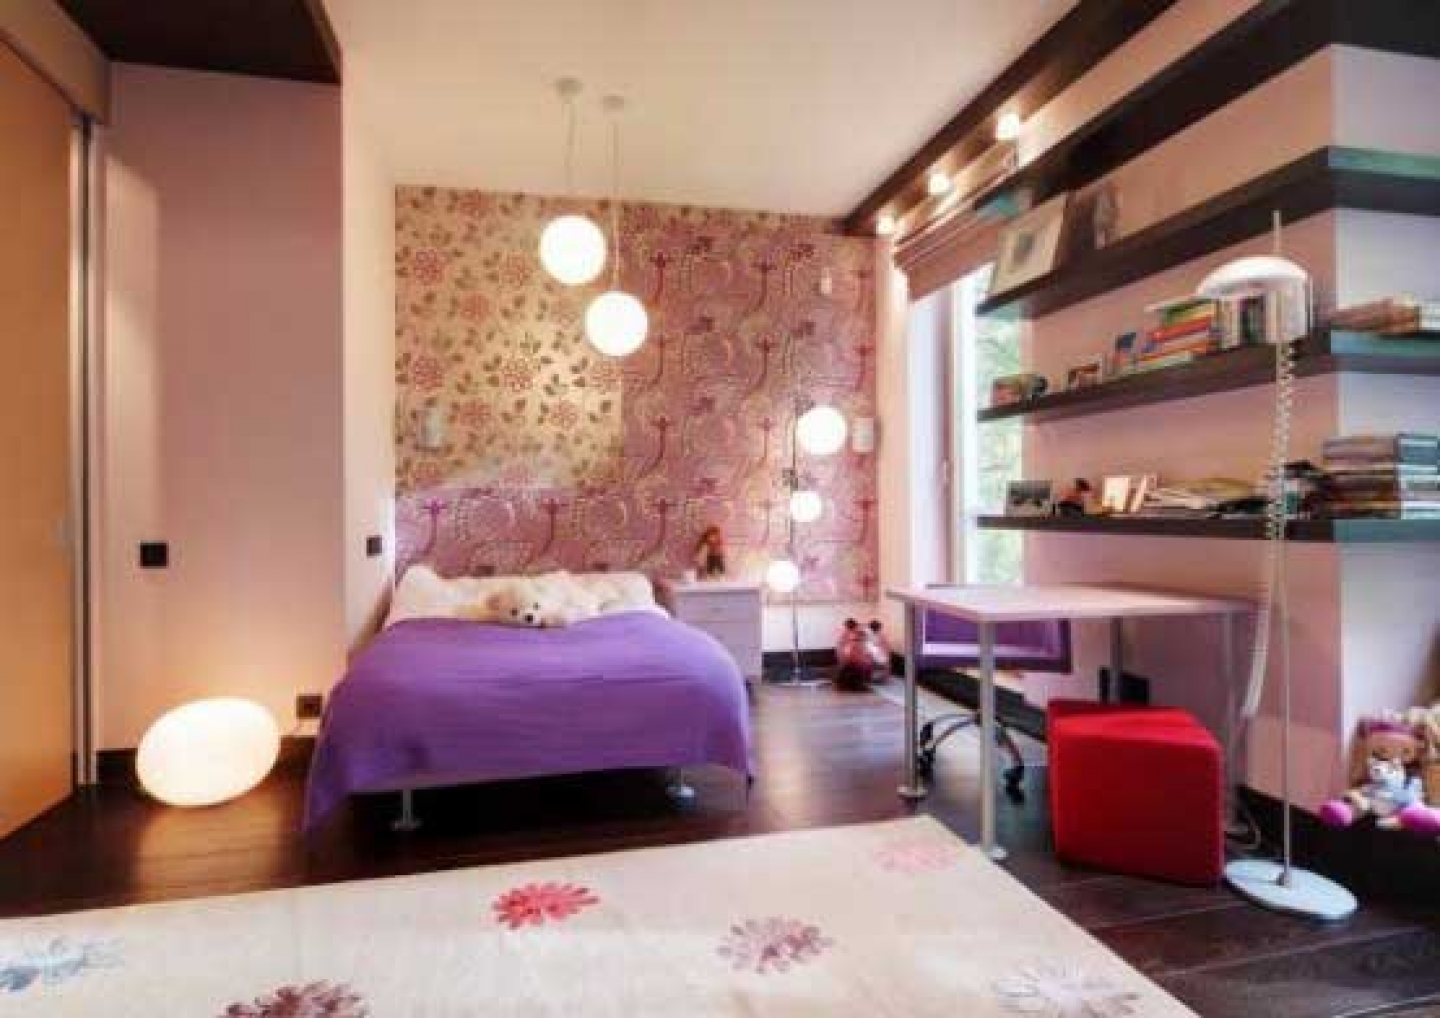 Girly Apartment Bedroom Interior Design